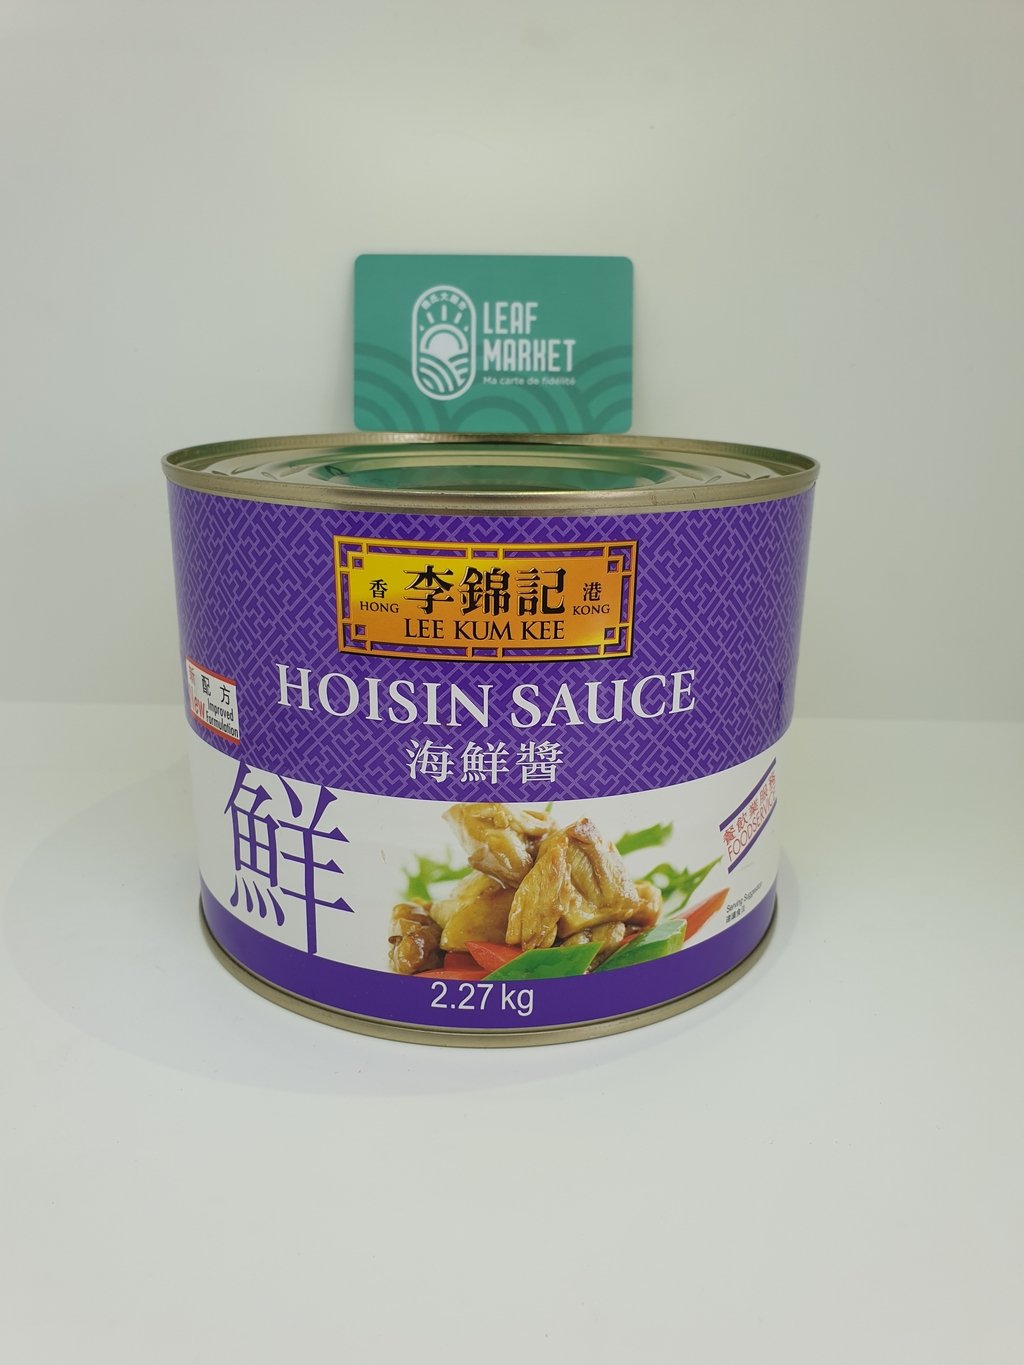 HOI SIN SAUCE LKK 2,27KG HK